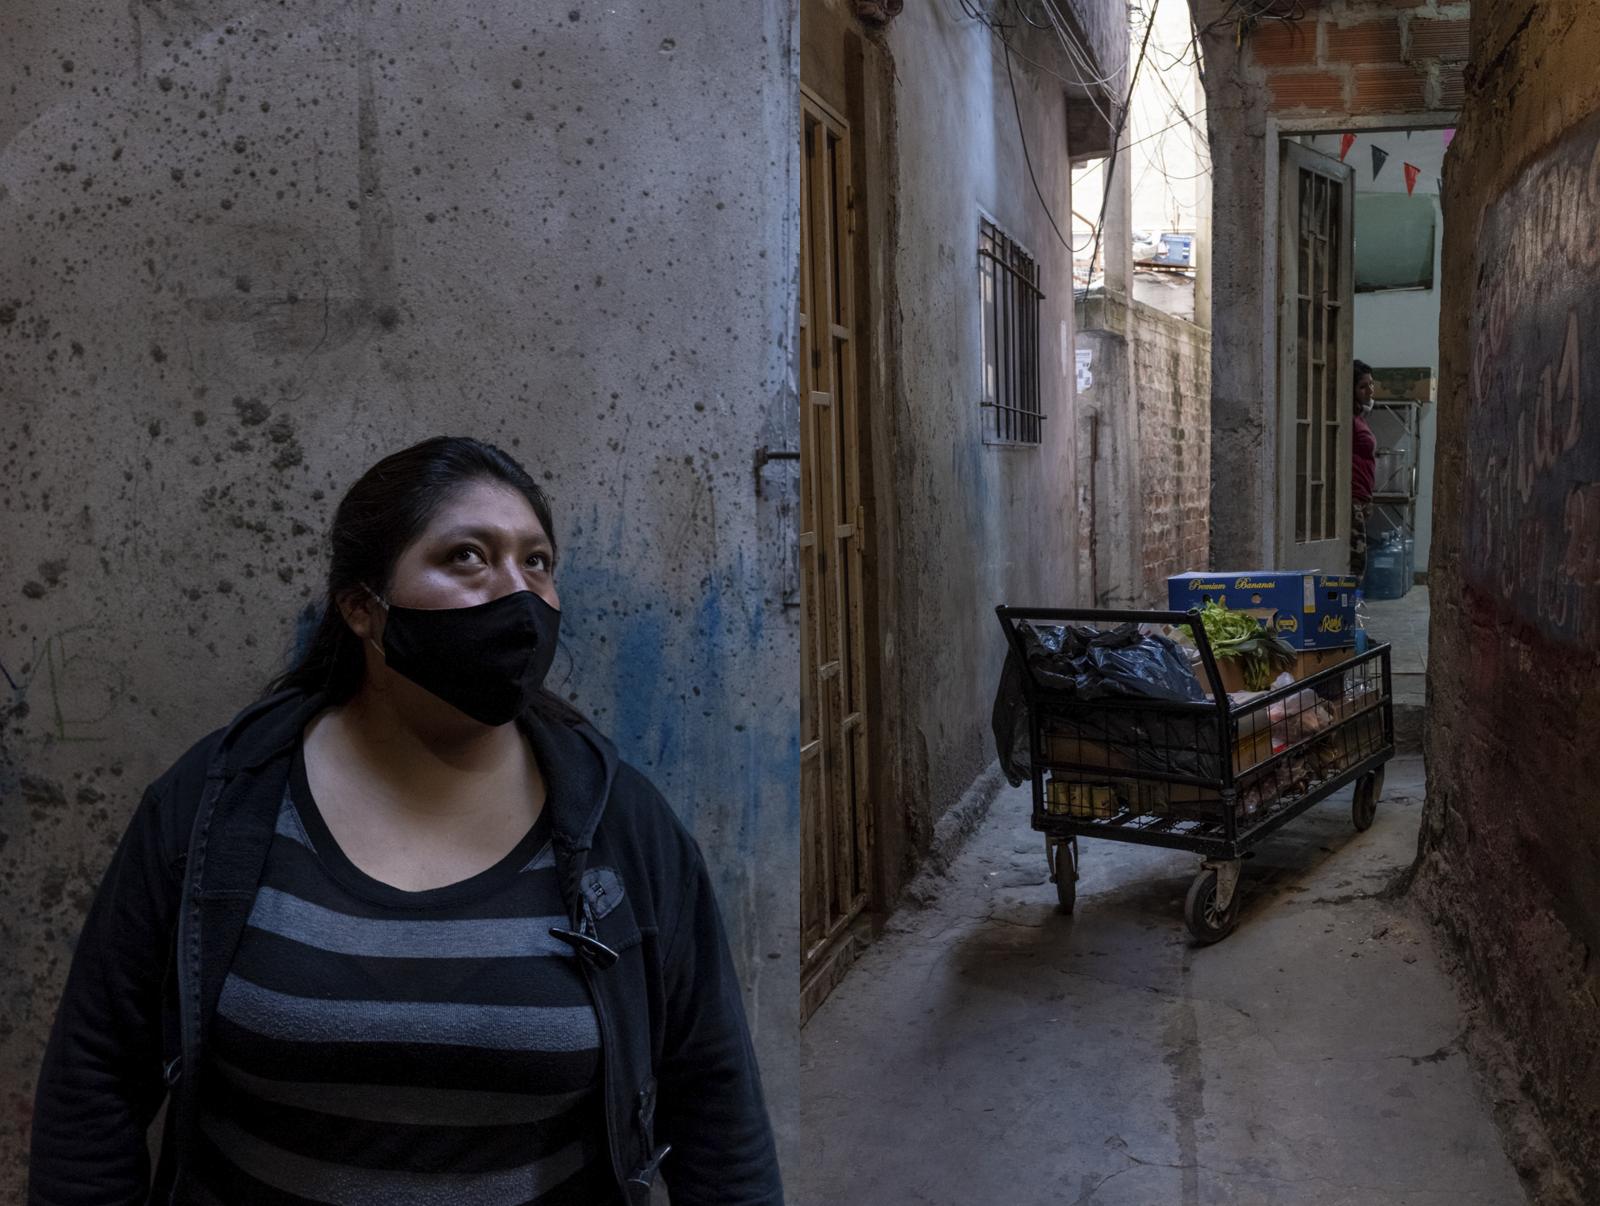 IMAGENES / IMAGES - Anita Pouchard / Mujeres migrantes al frente del COVID...